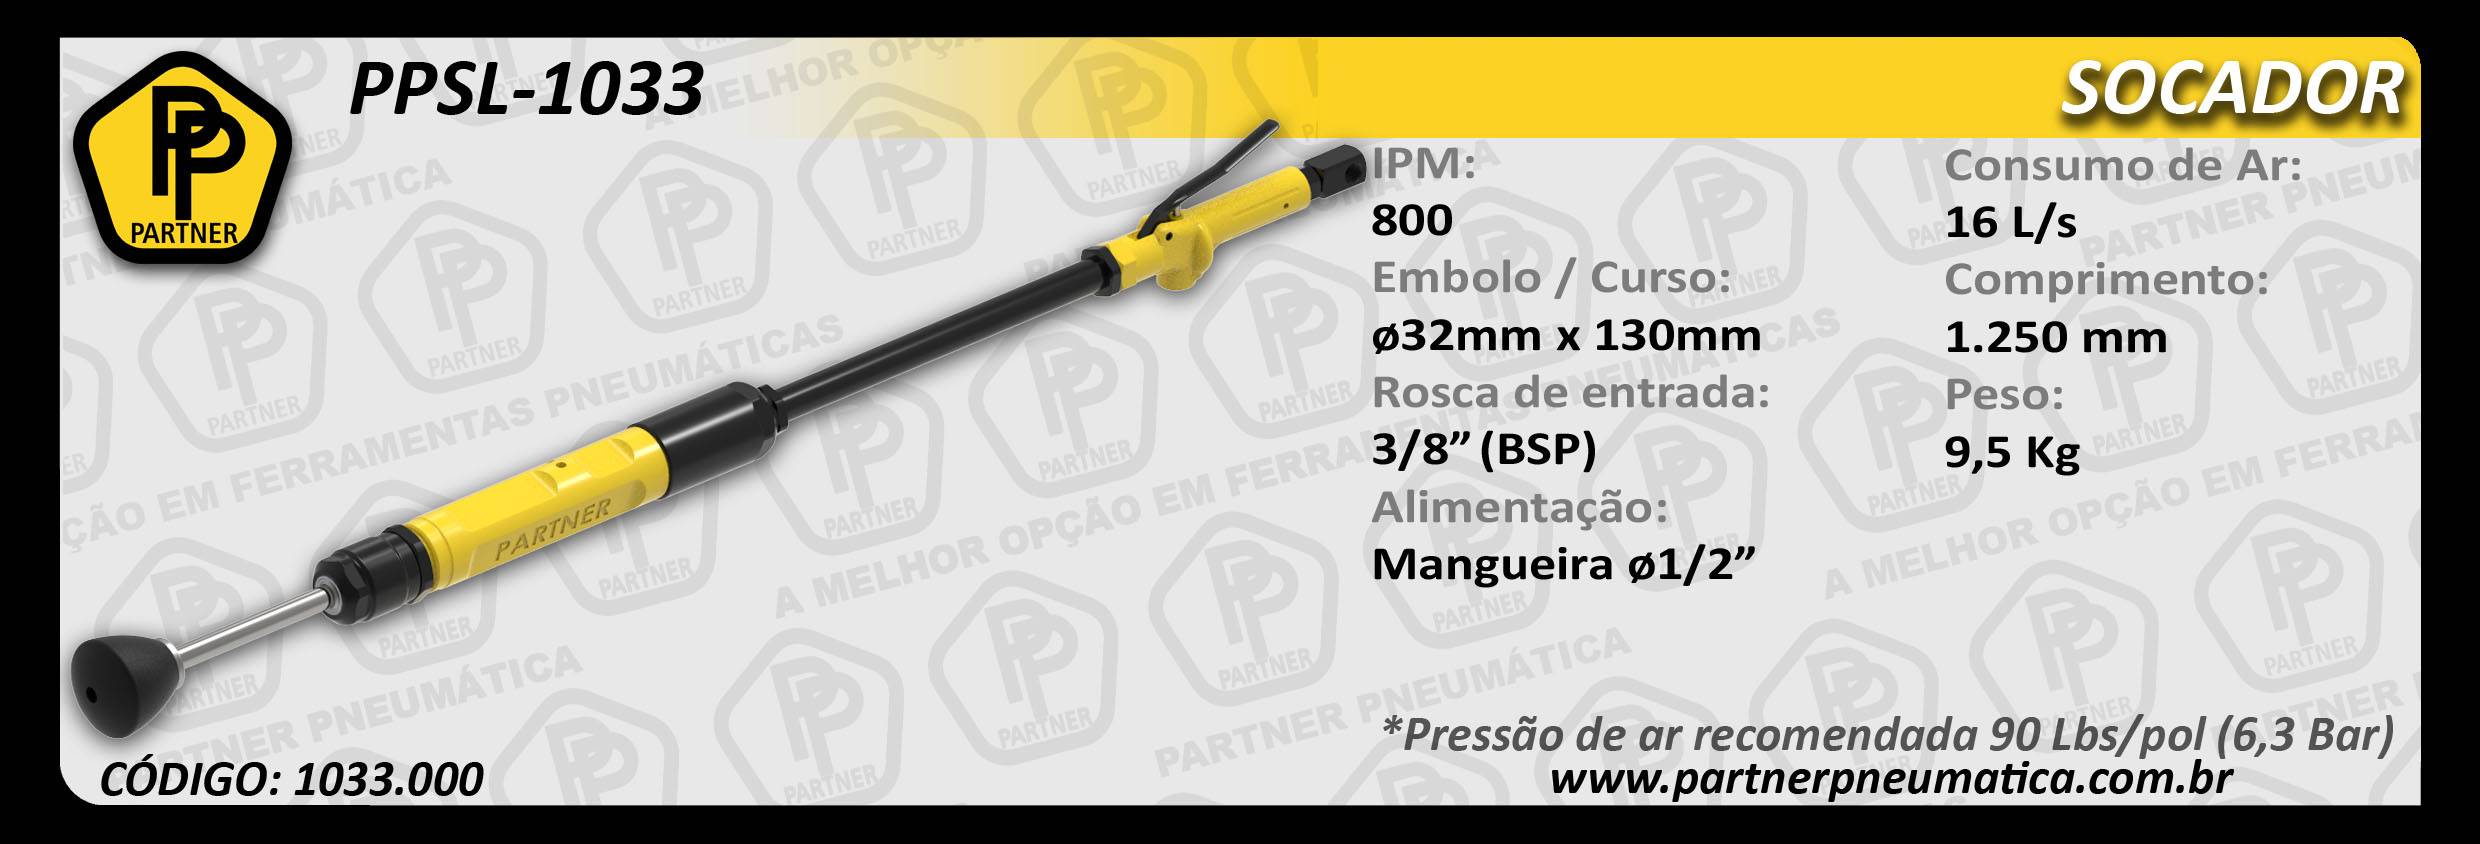 Socador PPSL-1033